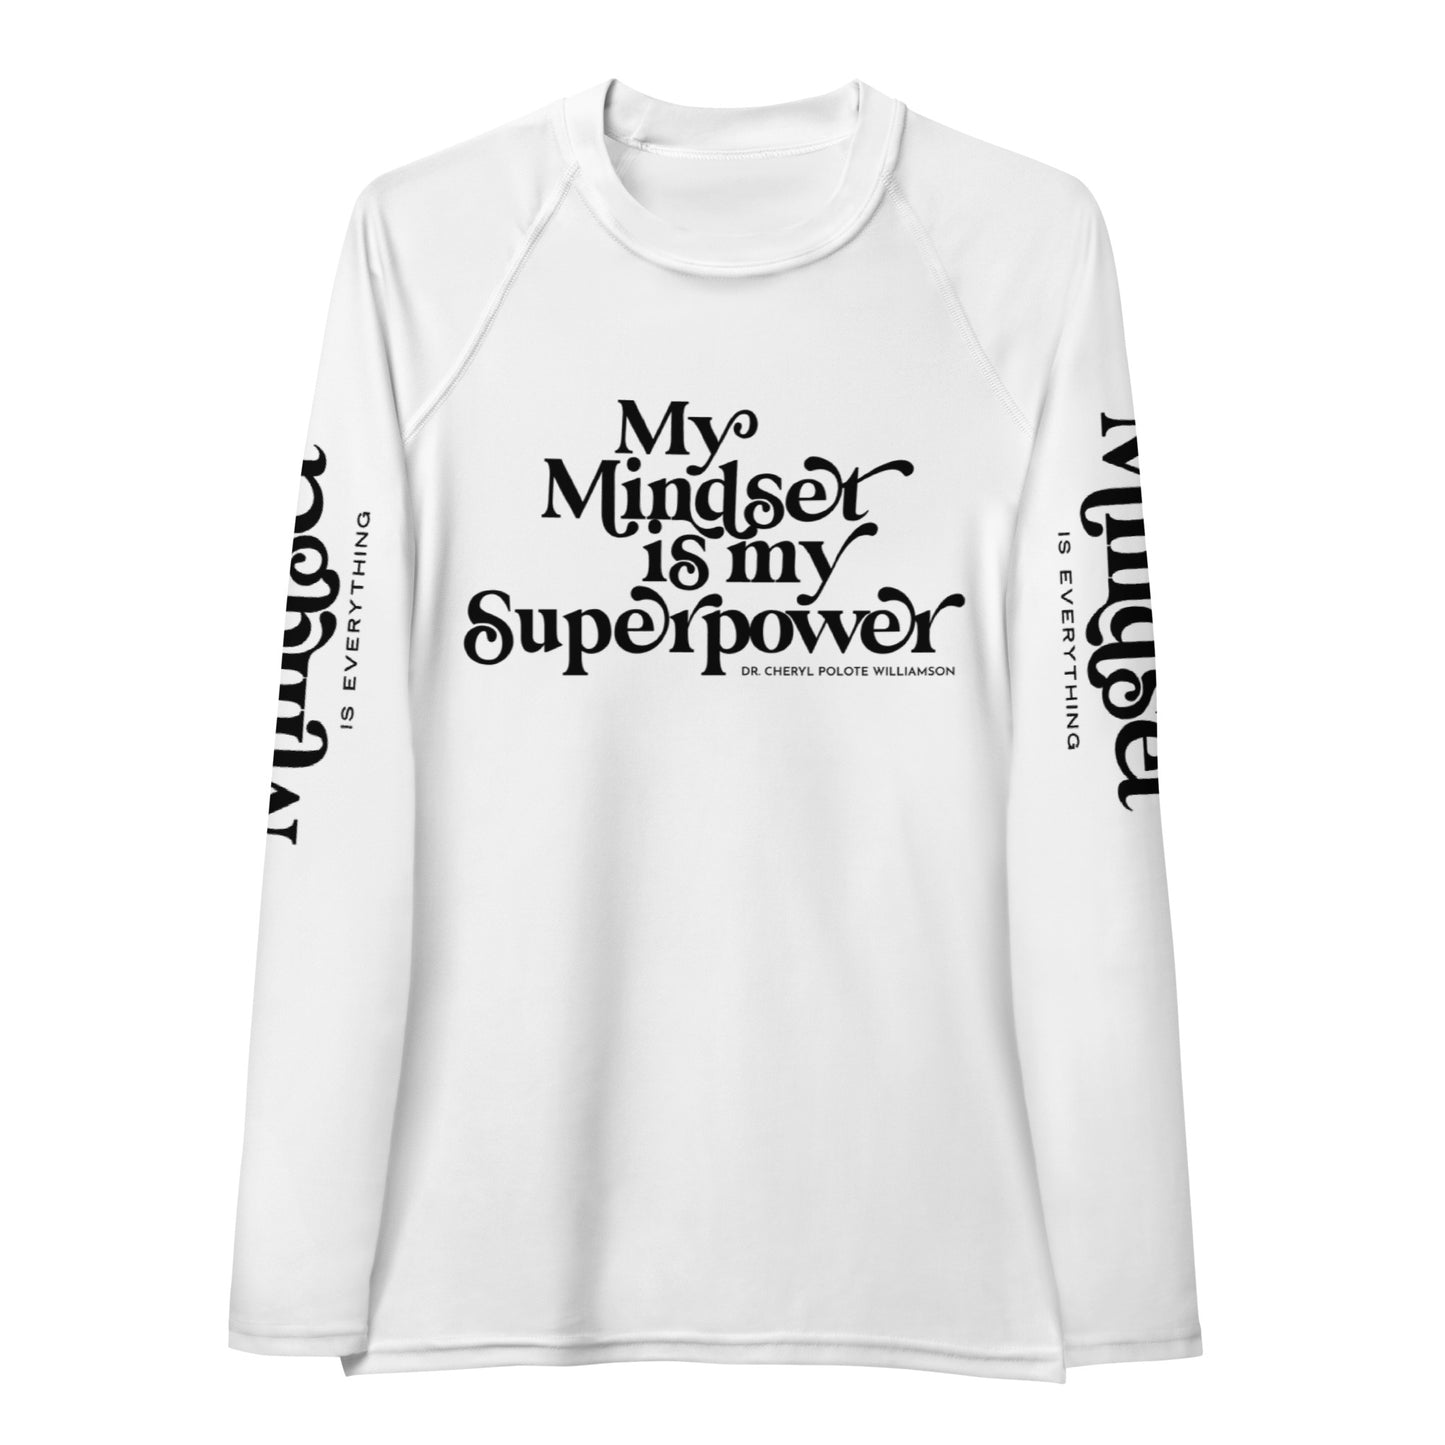 "My Mindset is My Superpower" Women's Rash Guard